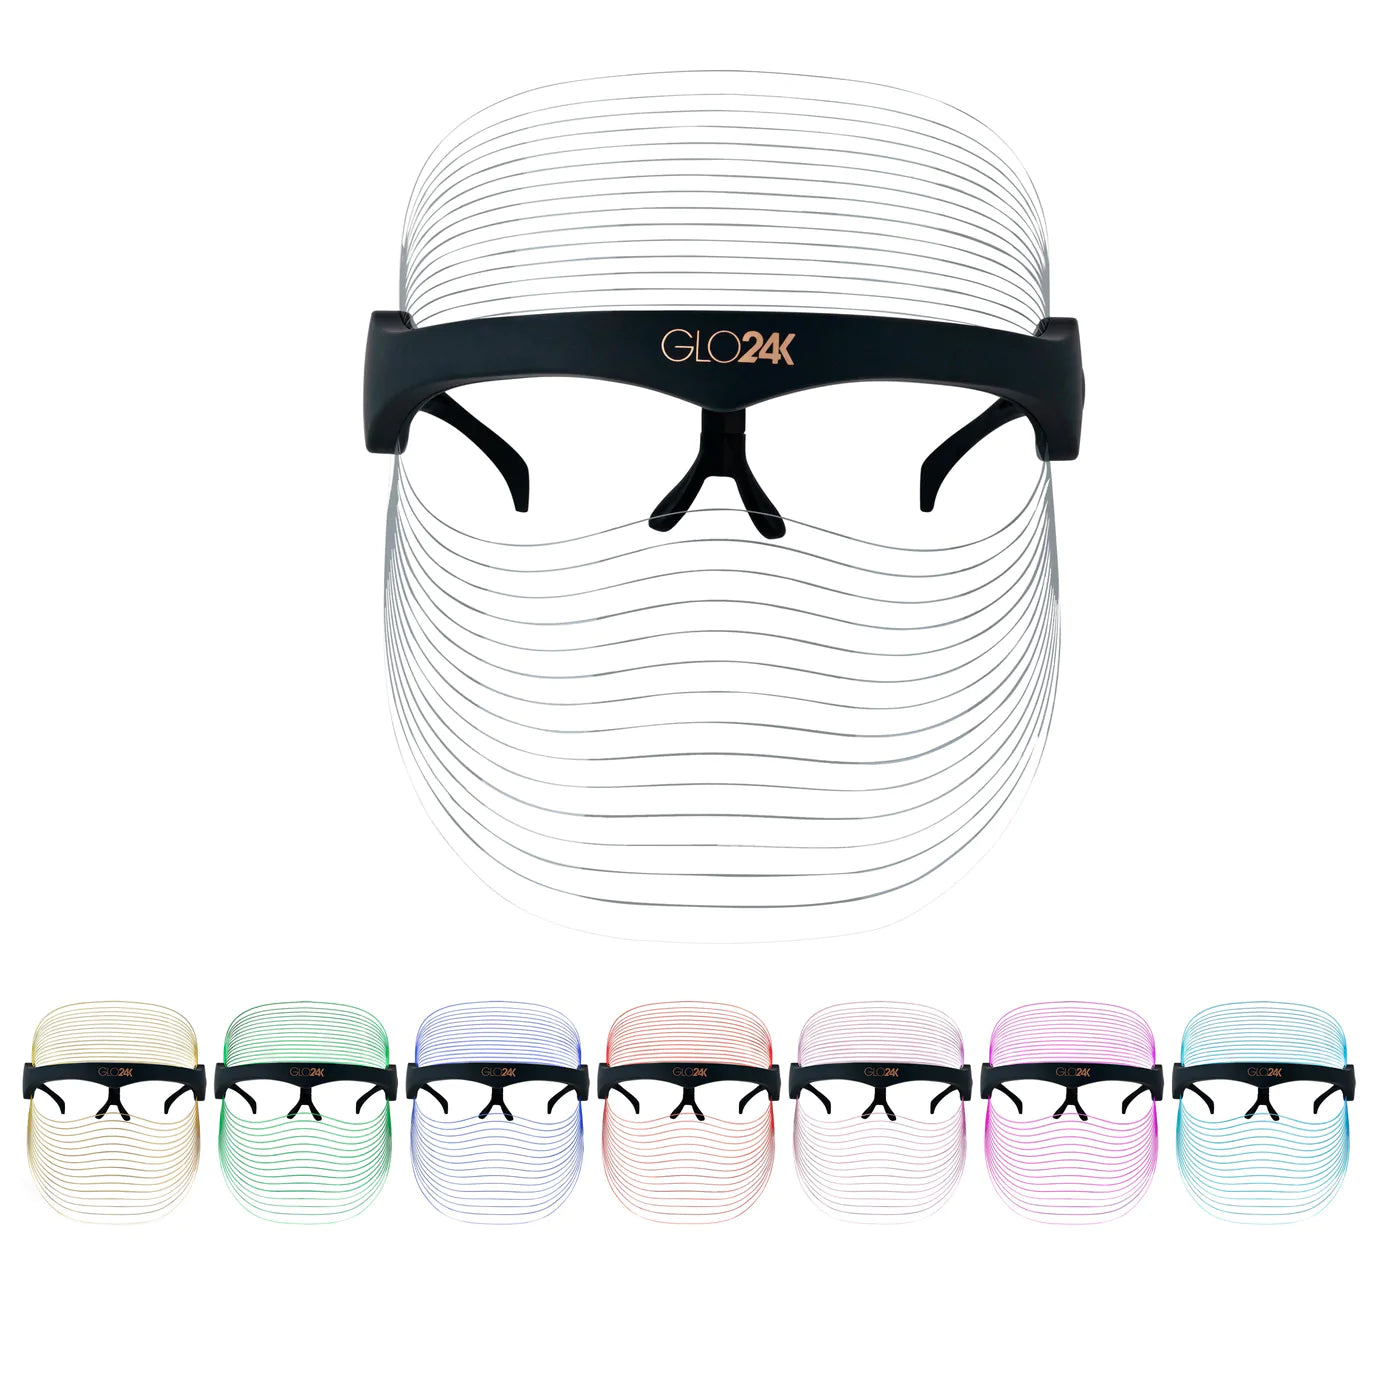 GLO24K 7 Colour LED Beauty Mask, grey light